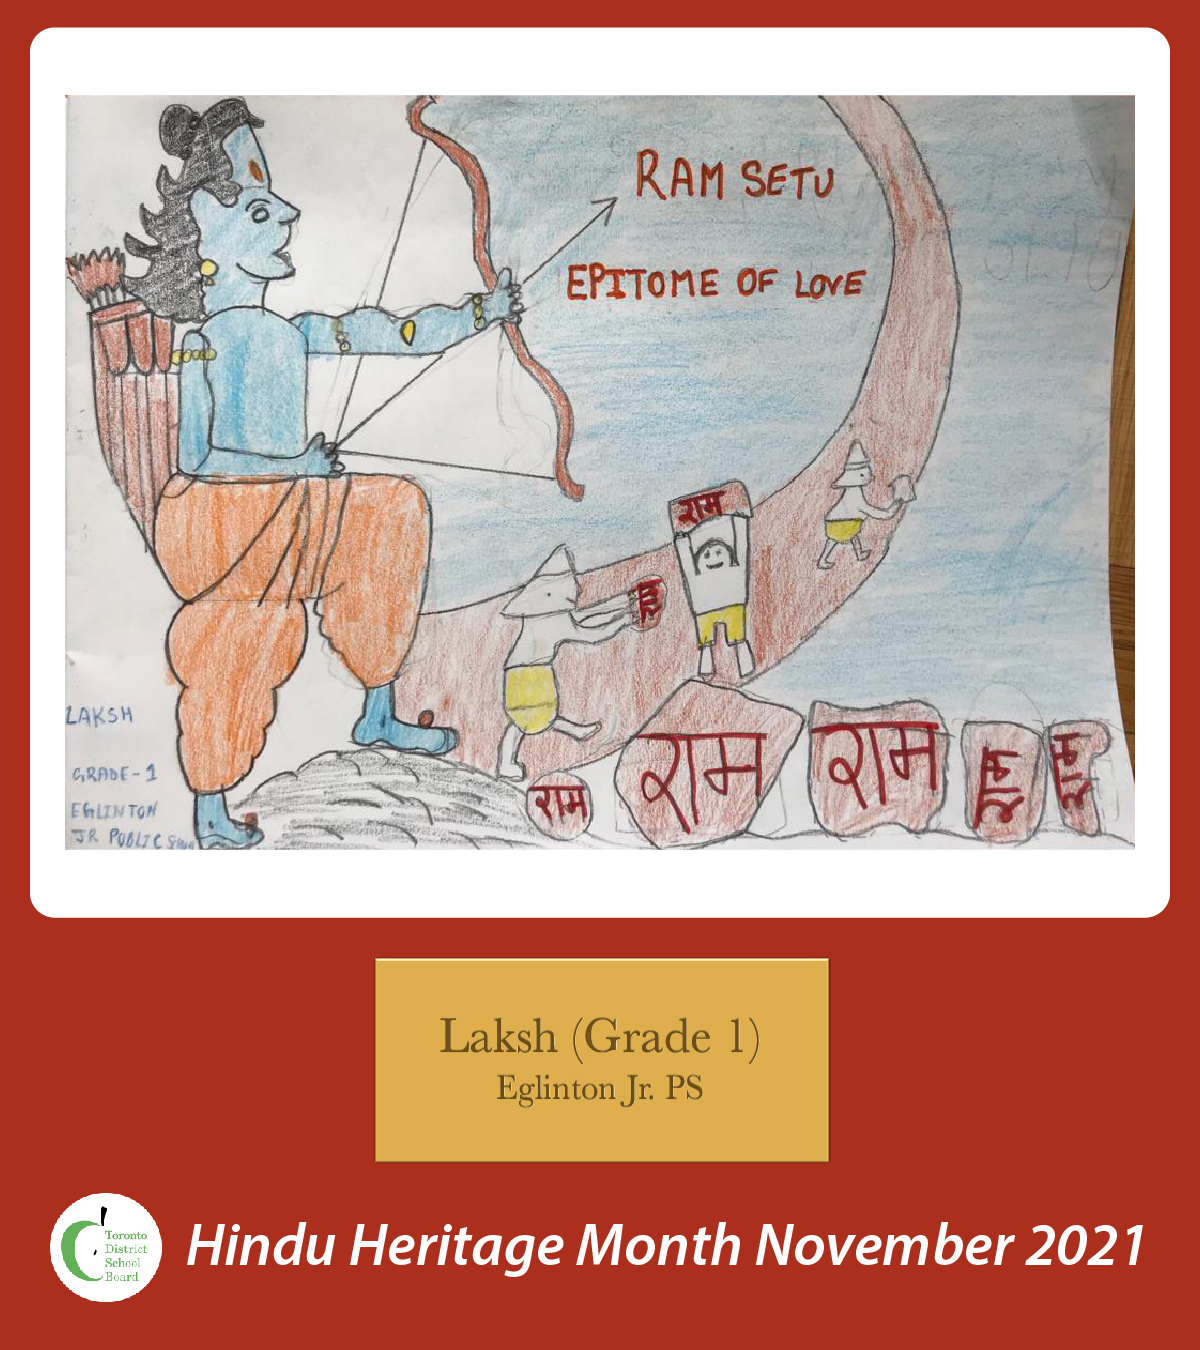 ram setu epitome of love drawn by Laksh grade 1